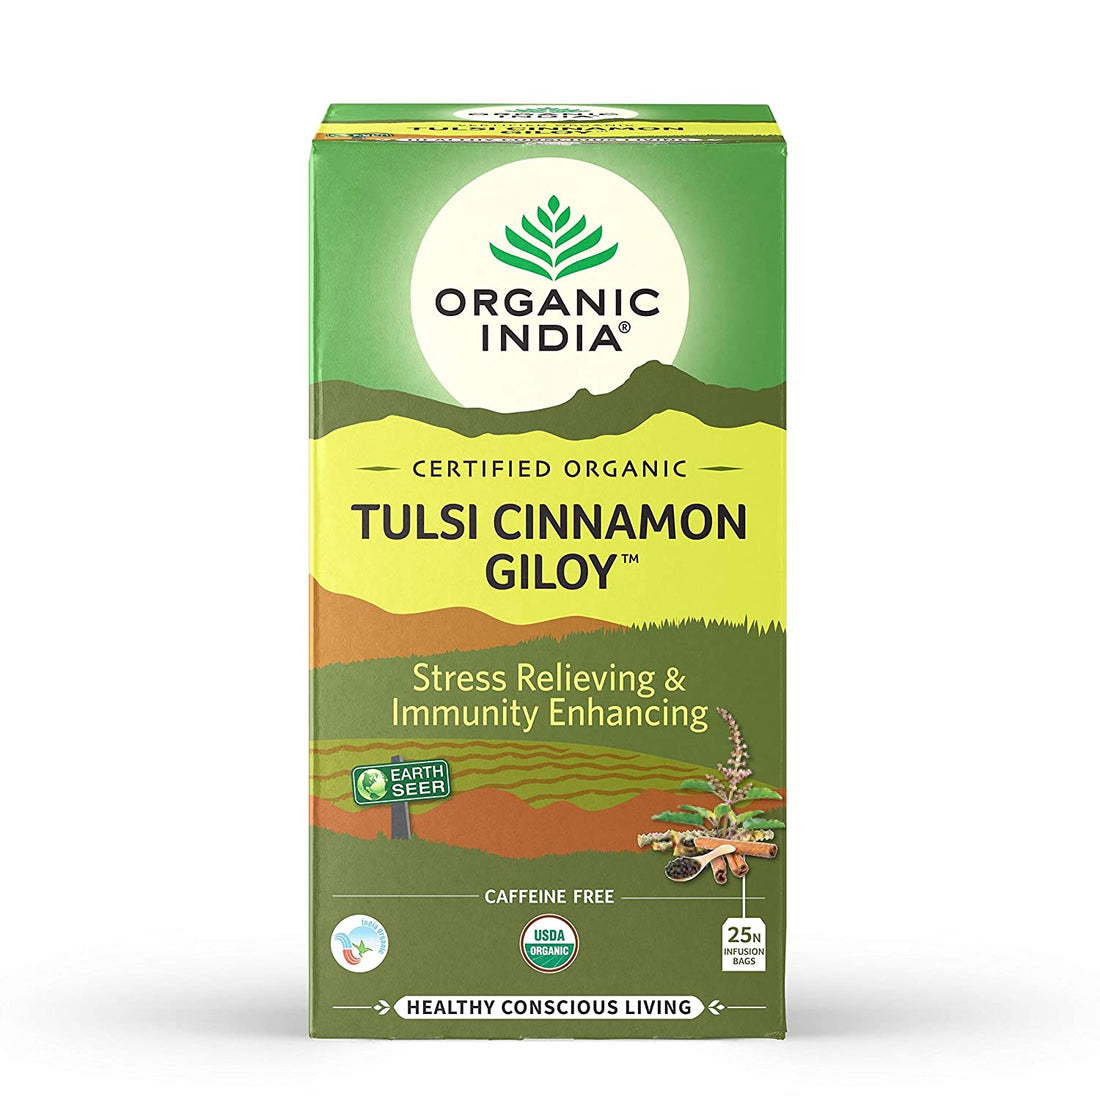 Organic India Tulsi Cinnamon Giloy Tea